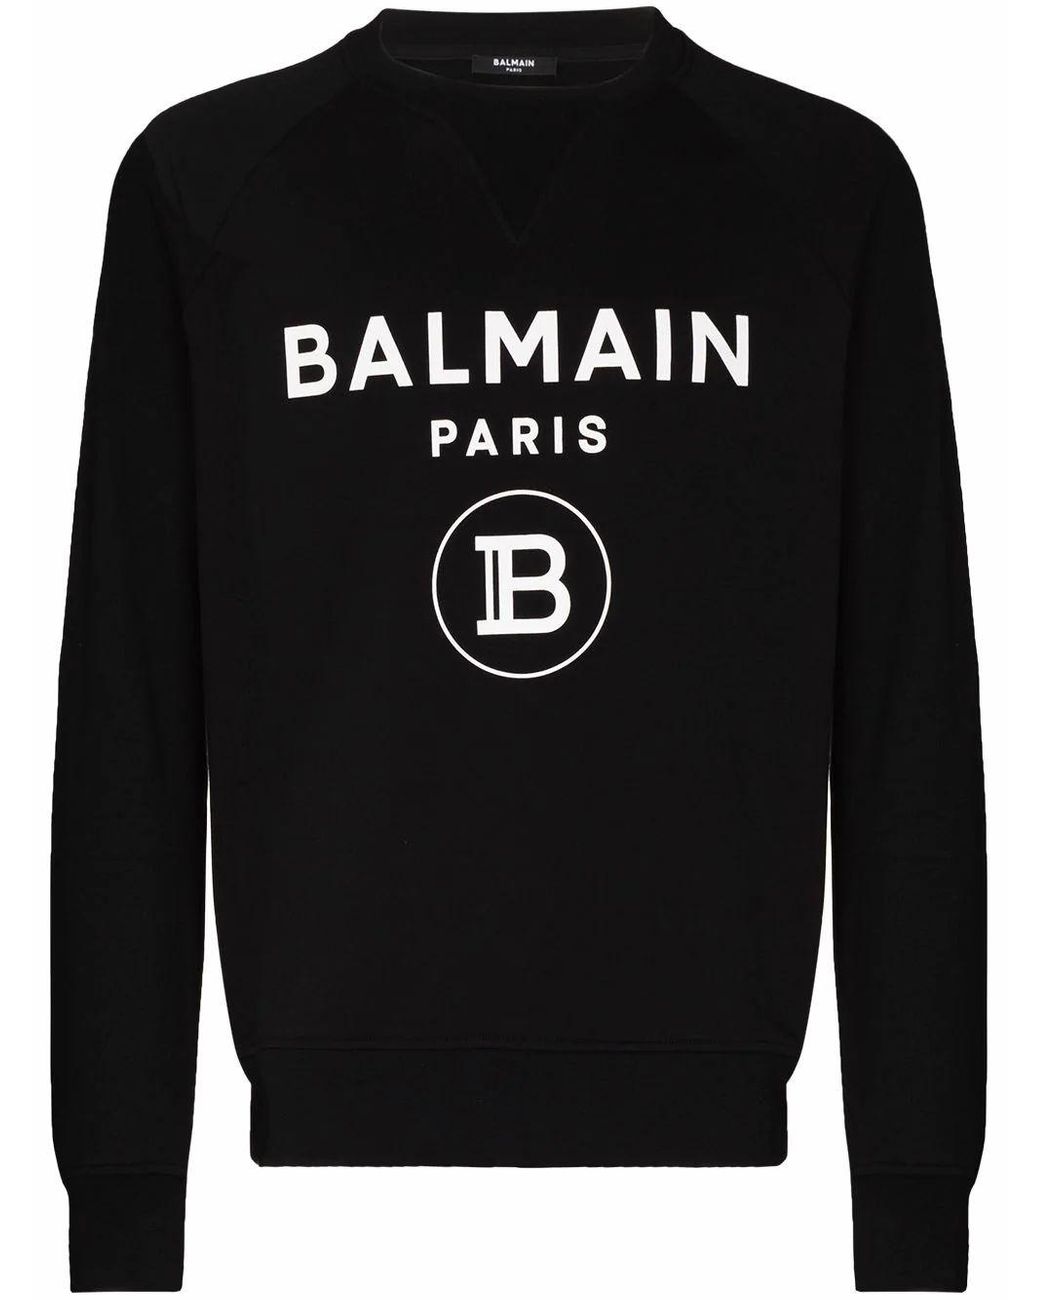 Balmain Cotton Sweatshirt in Black for Men - Lyst